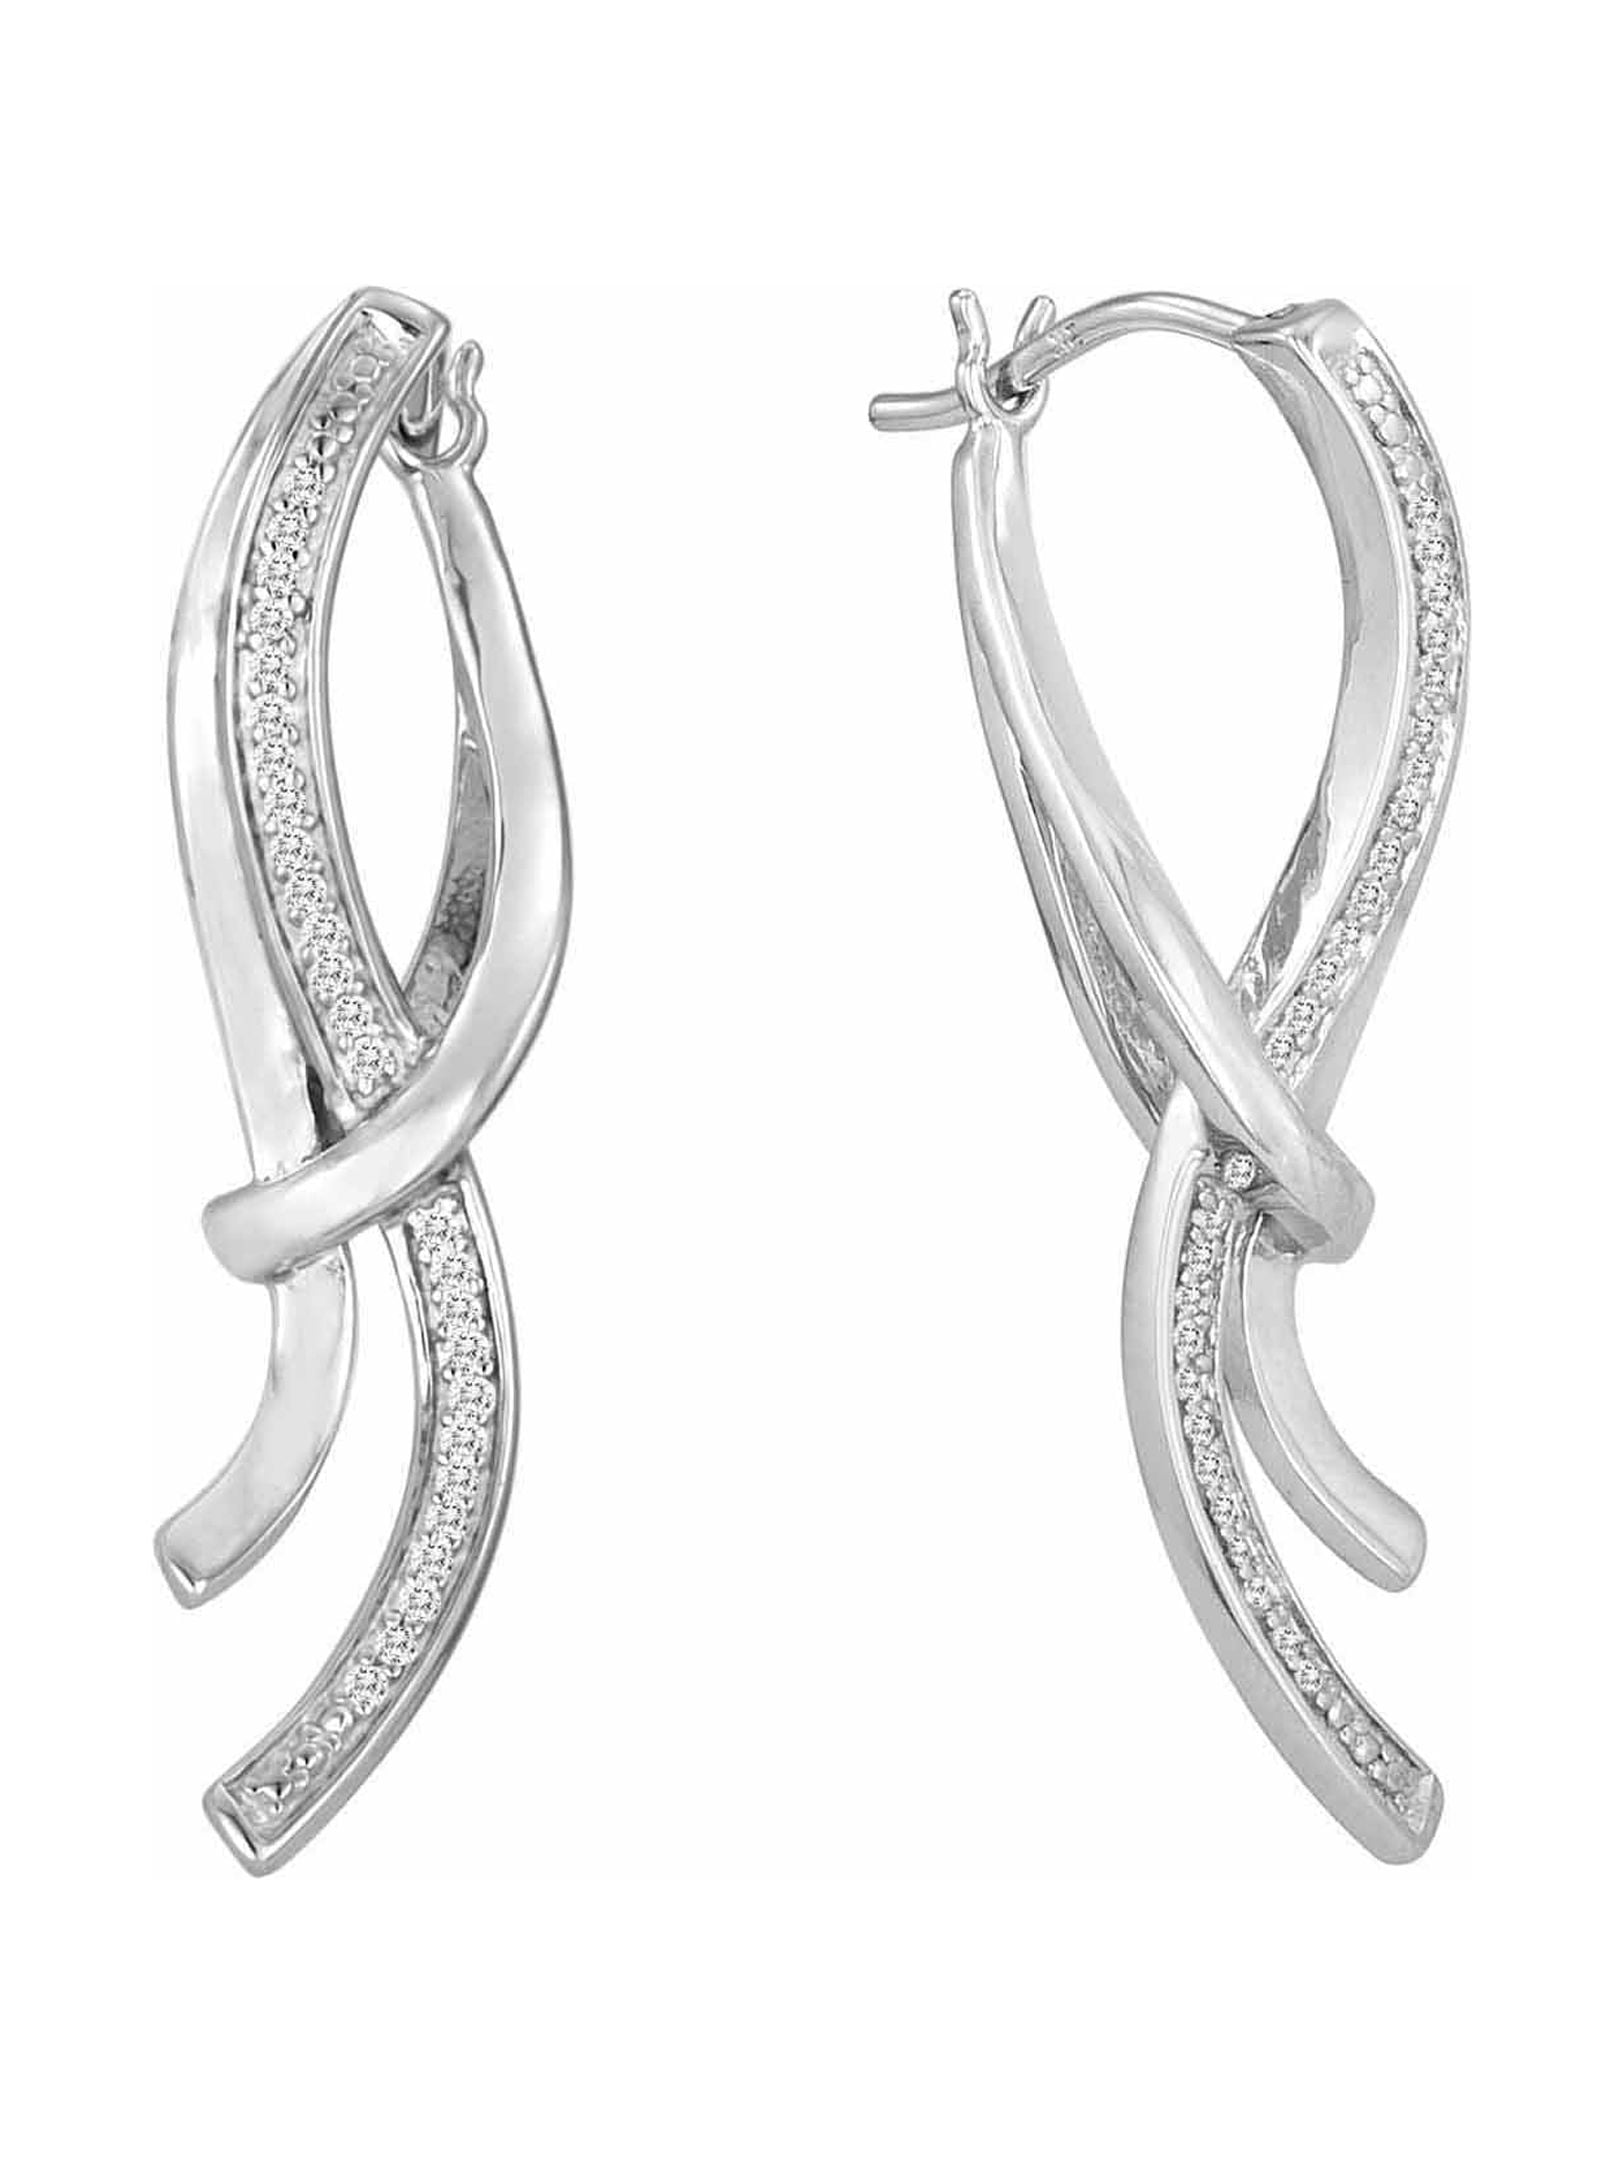 As Photo Women Fashion Jewellery / Party Accessories / Silver Jewelry / Jewelry  Earring / Retro Earrings at Best Price in Shantou | Eaglecastle Co., Ltd.